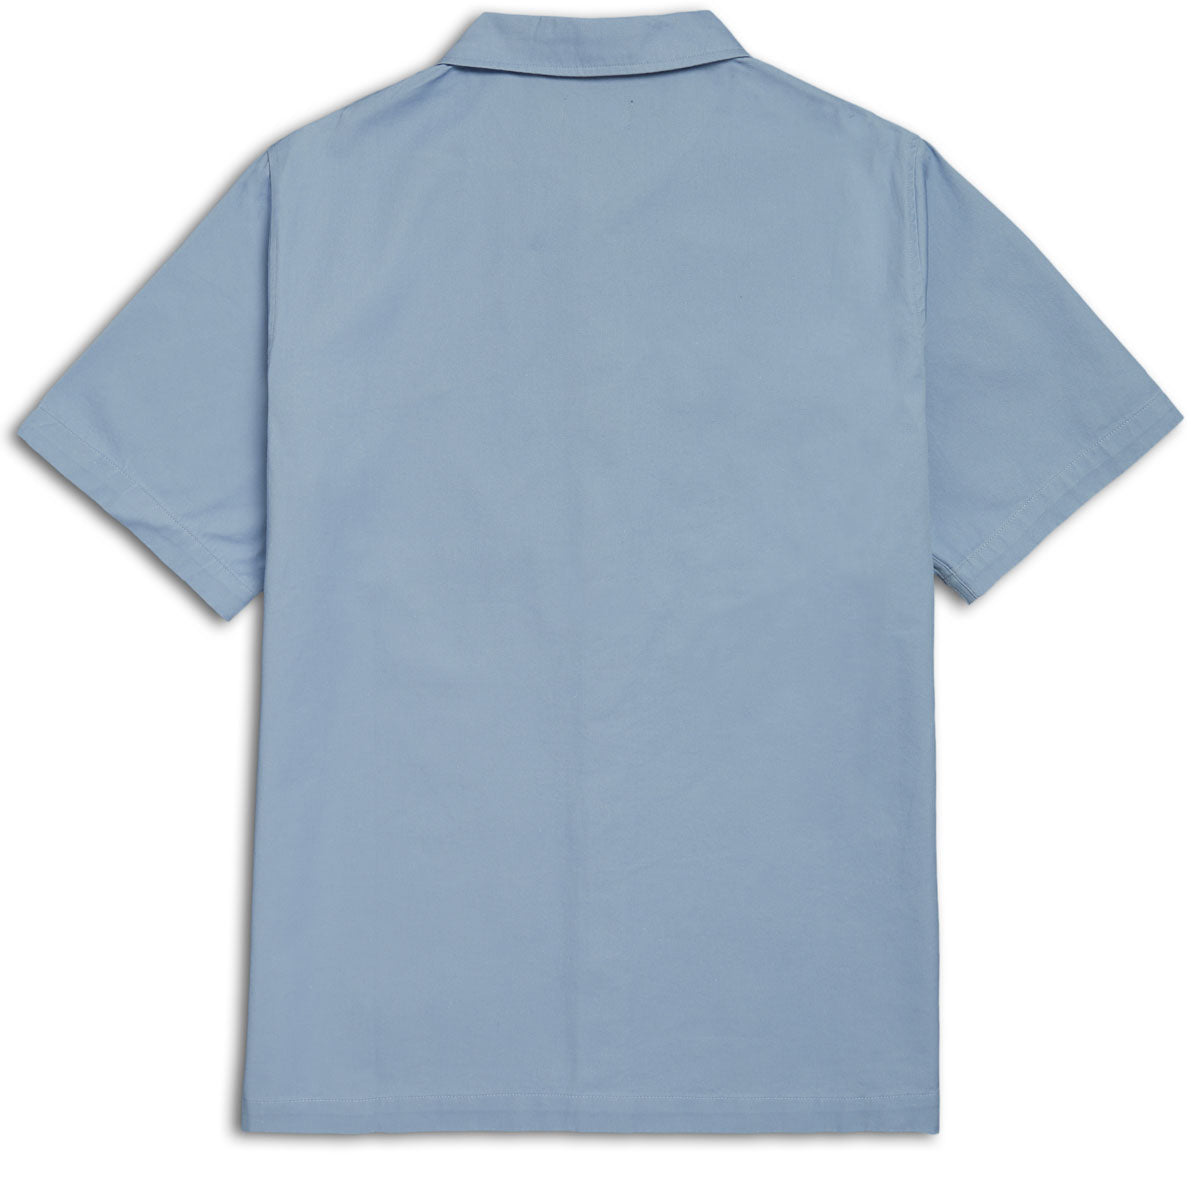 CCS Heavy Cotton Work Shirt - Light Blue image 2